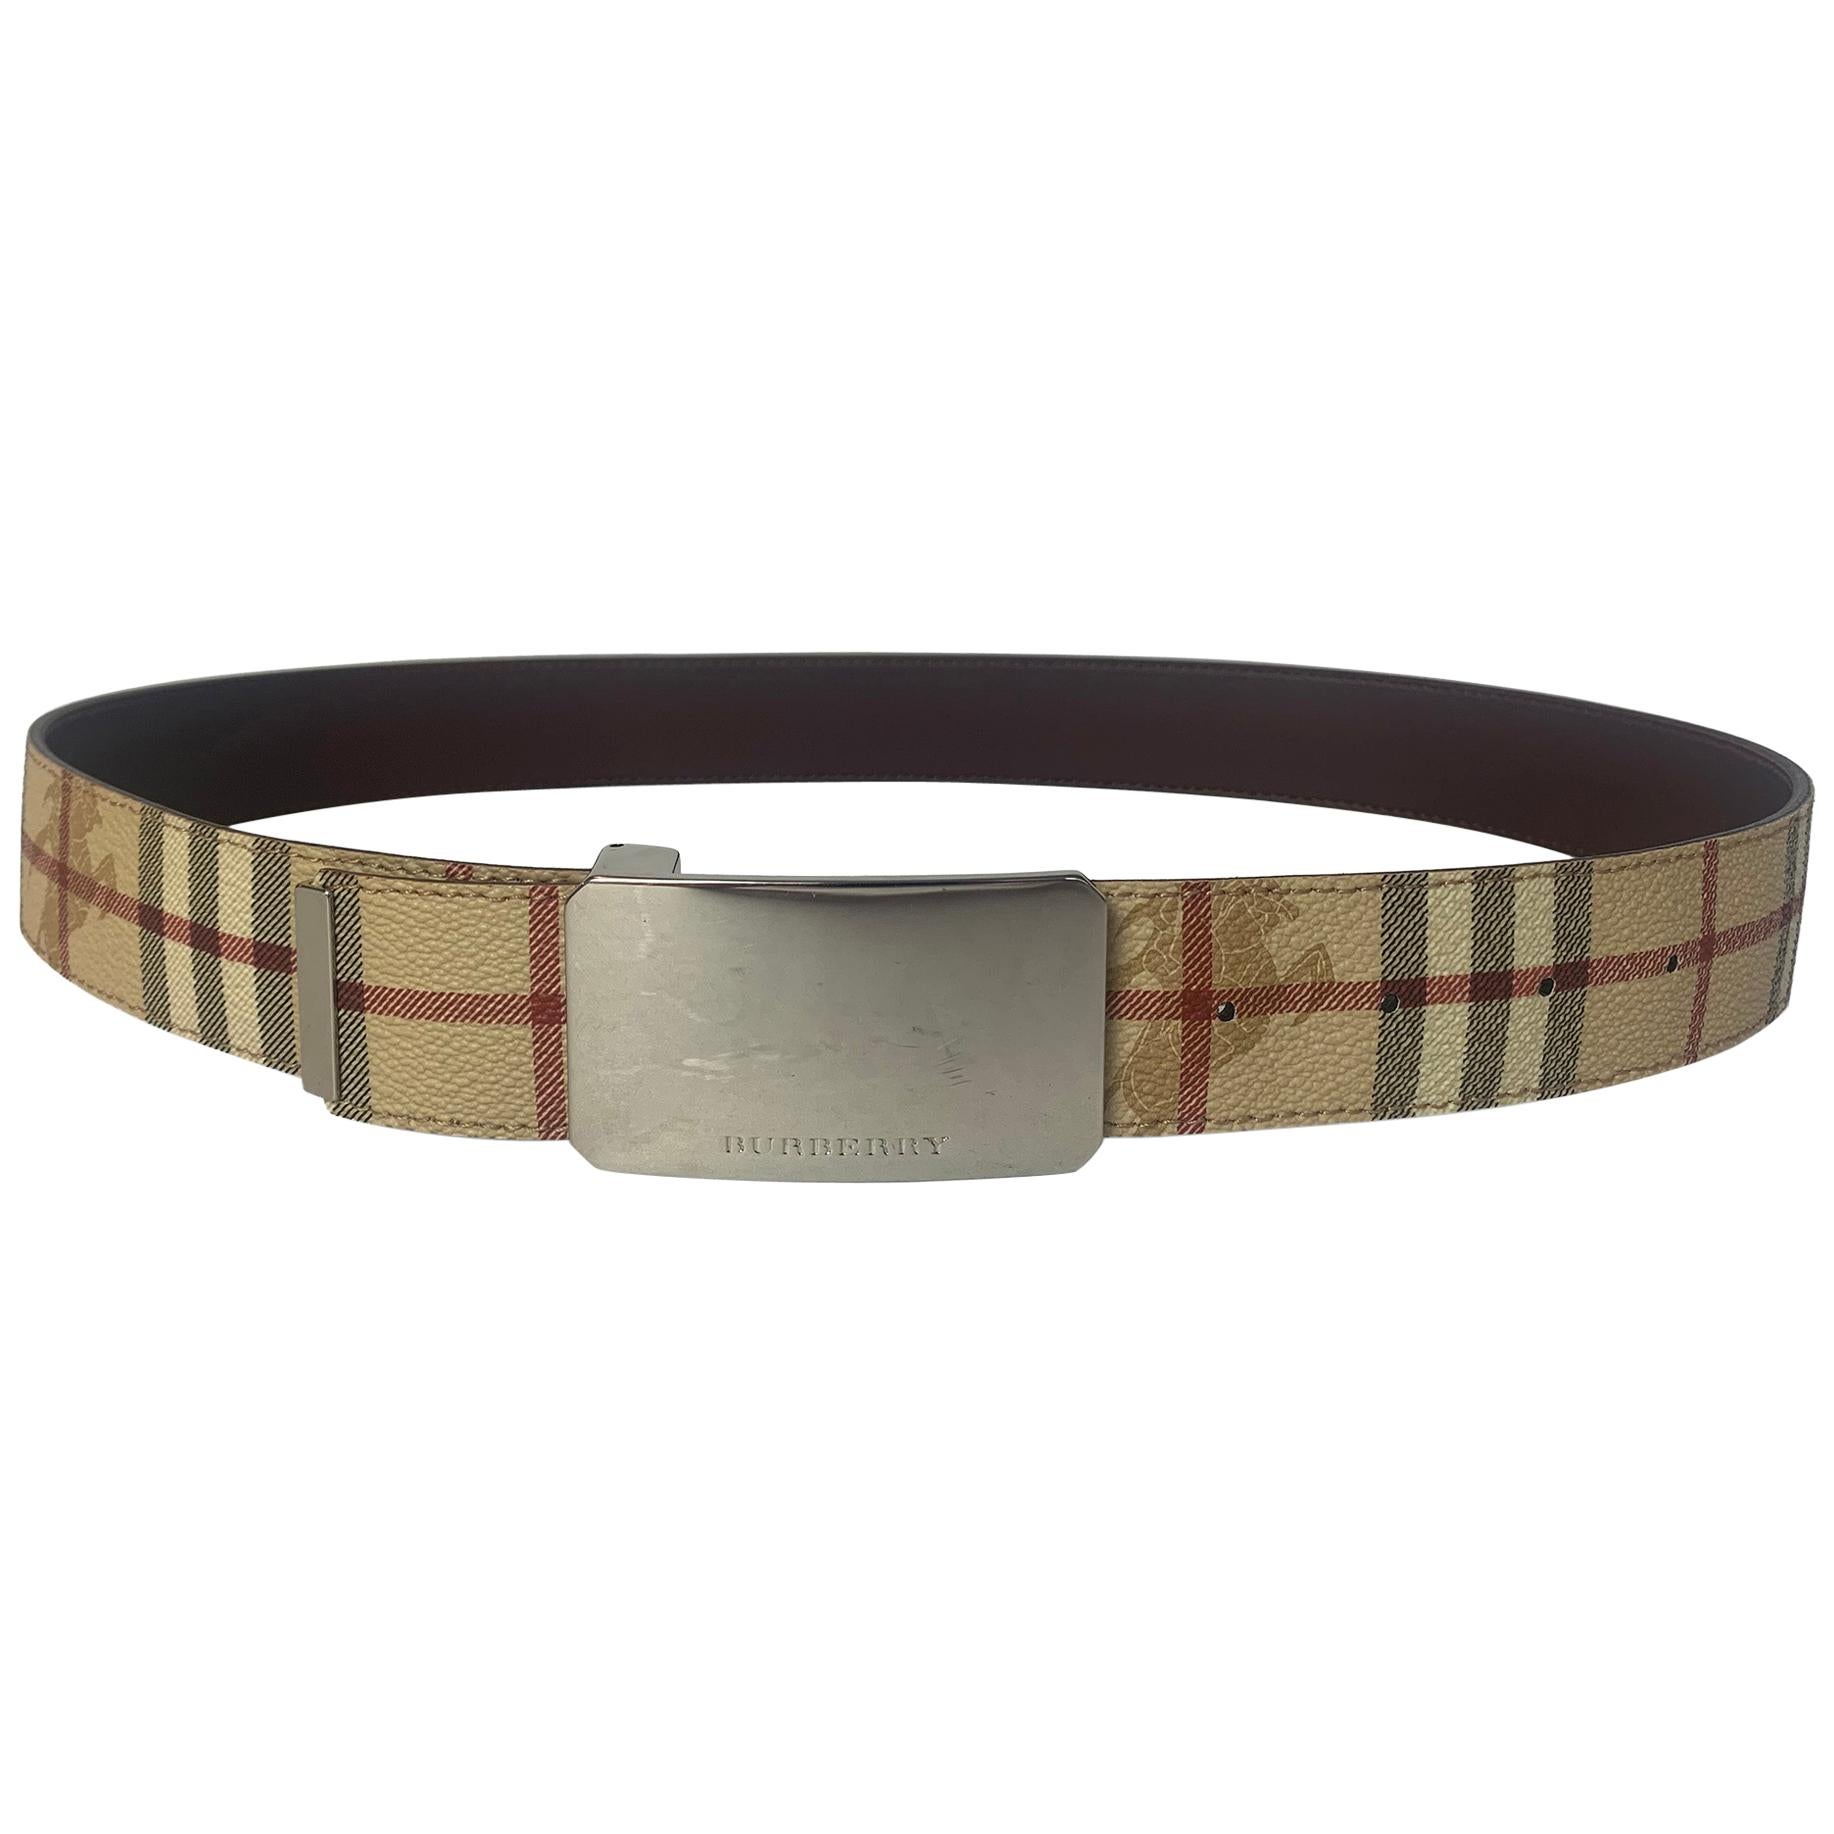 Burberry Plaid Check/Brown Leather Reversible Belt sz 30.5"-34.75"